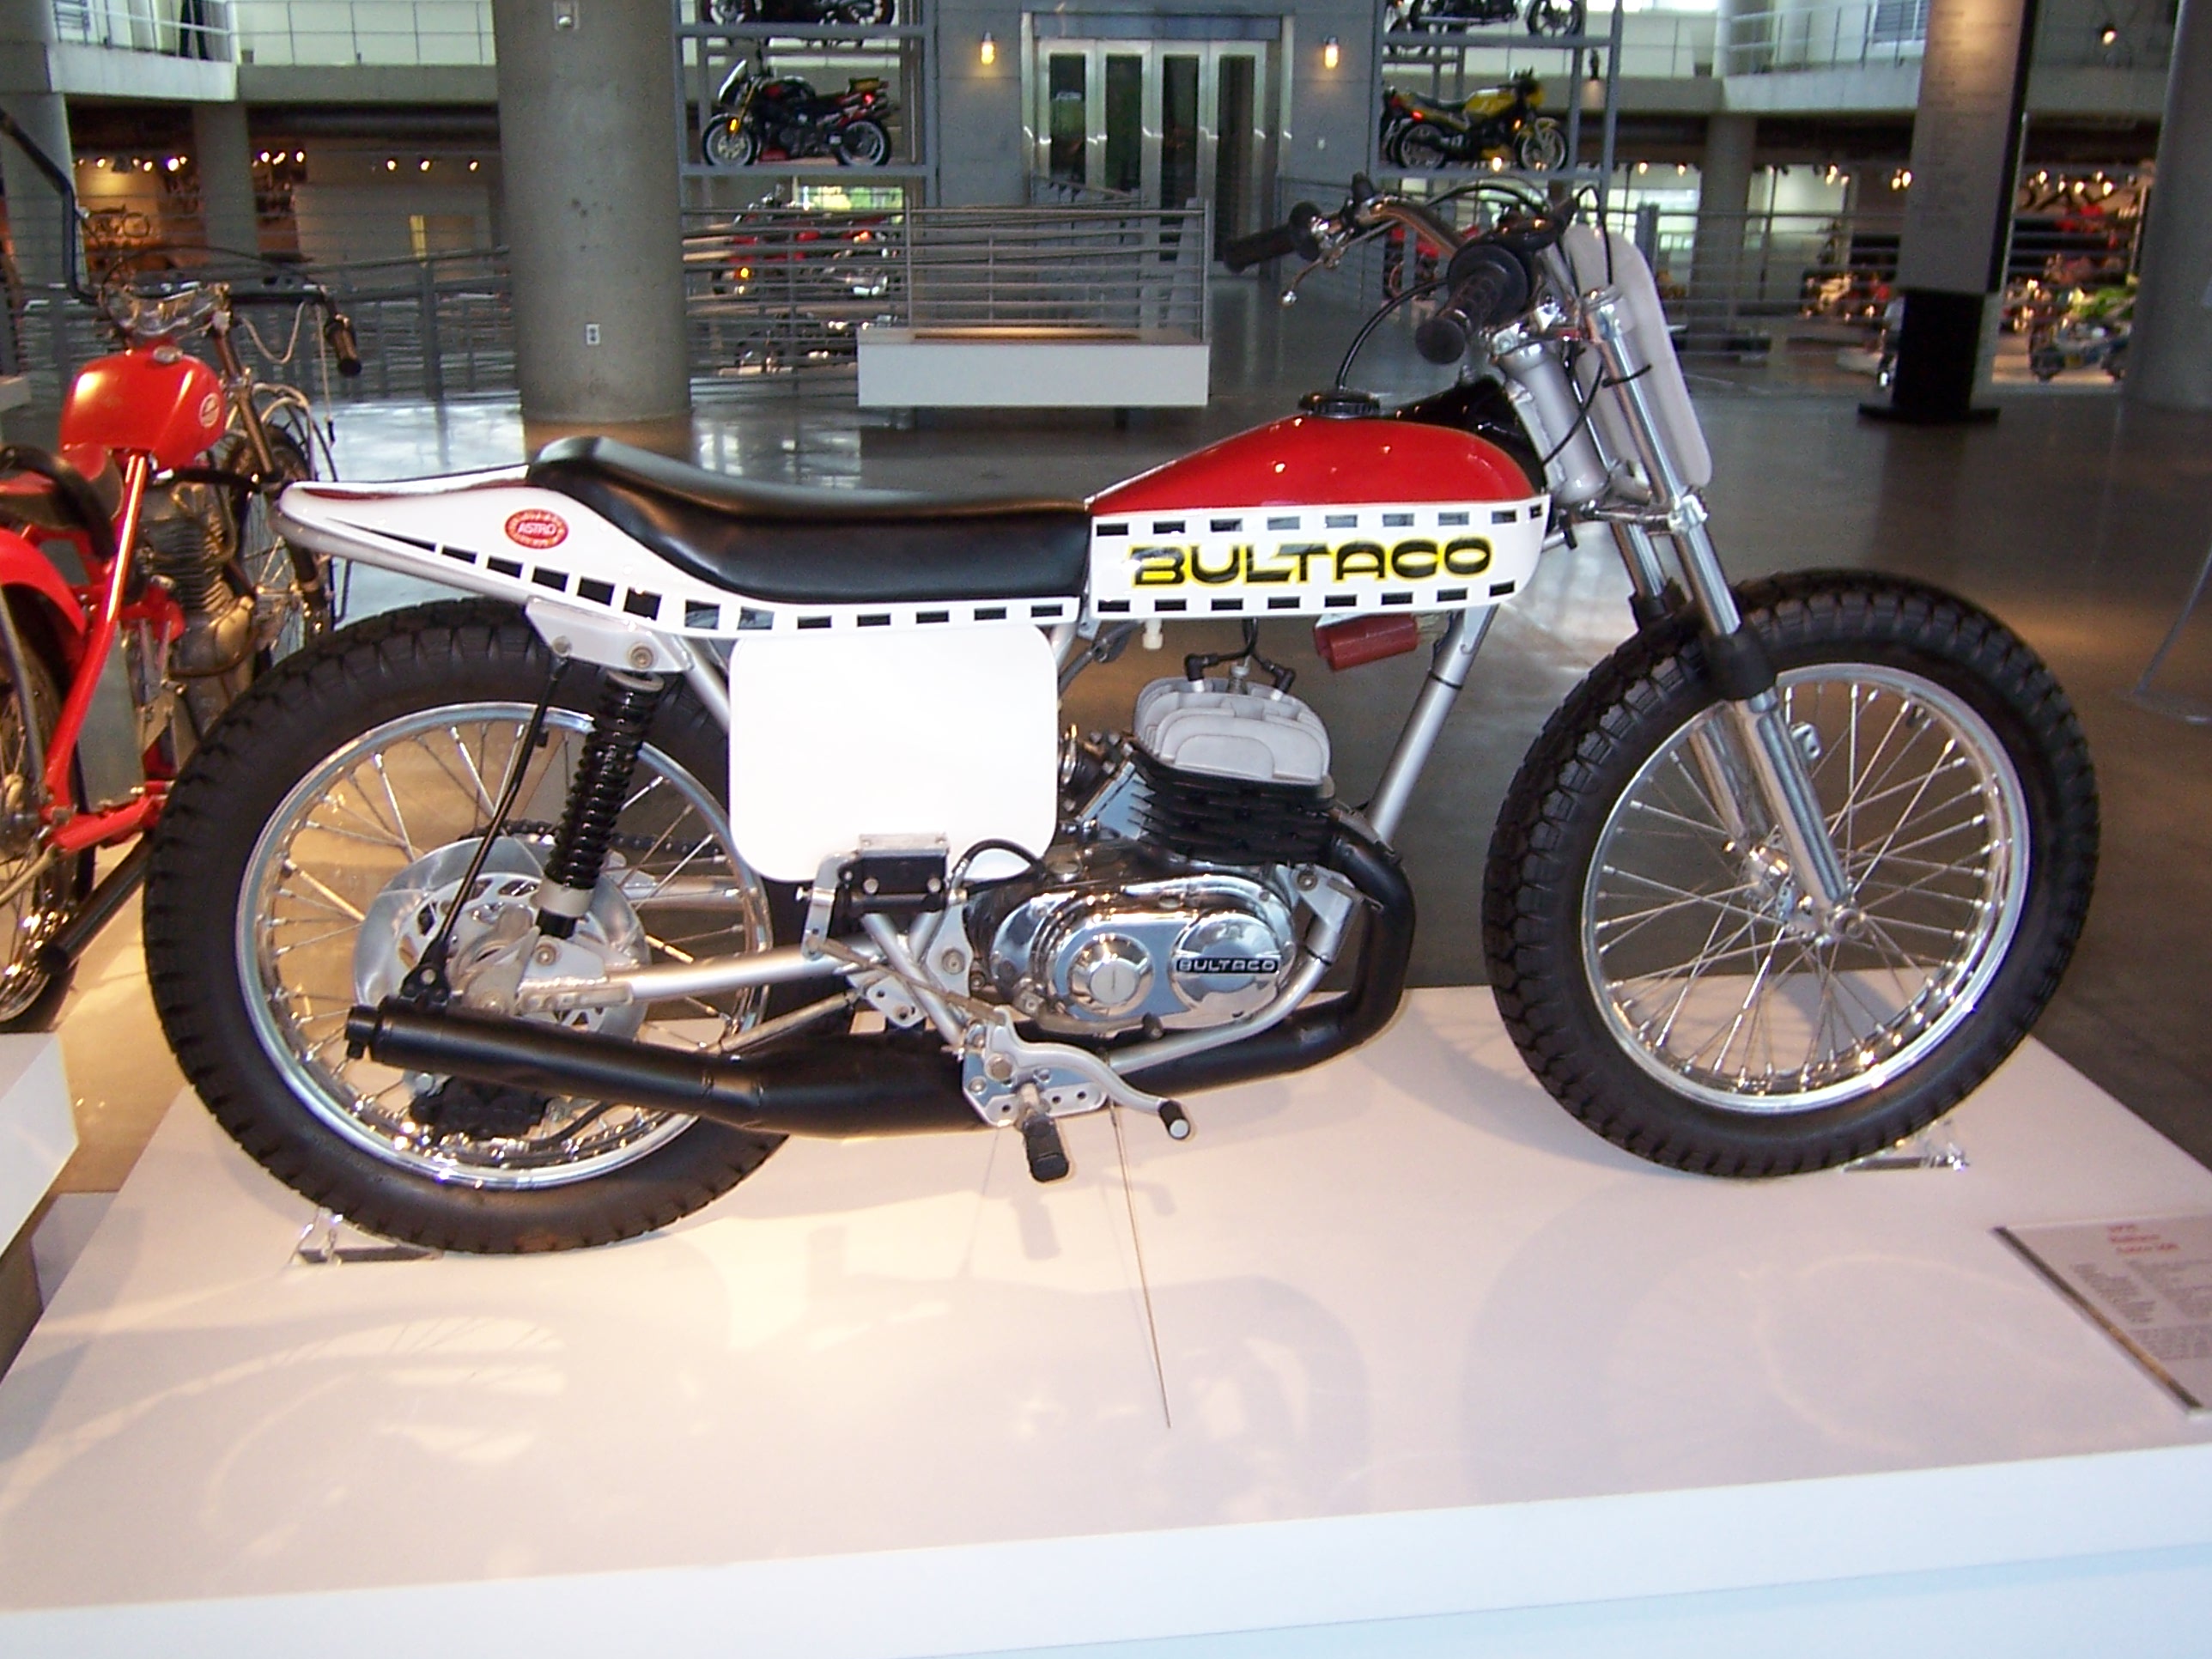 File:1975 Bultaco Astro360.jpg - Wikimedia Commons